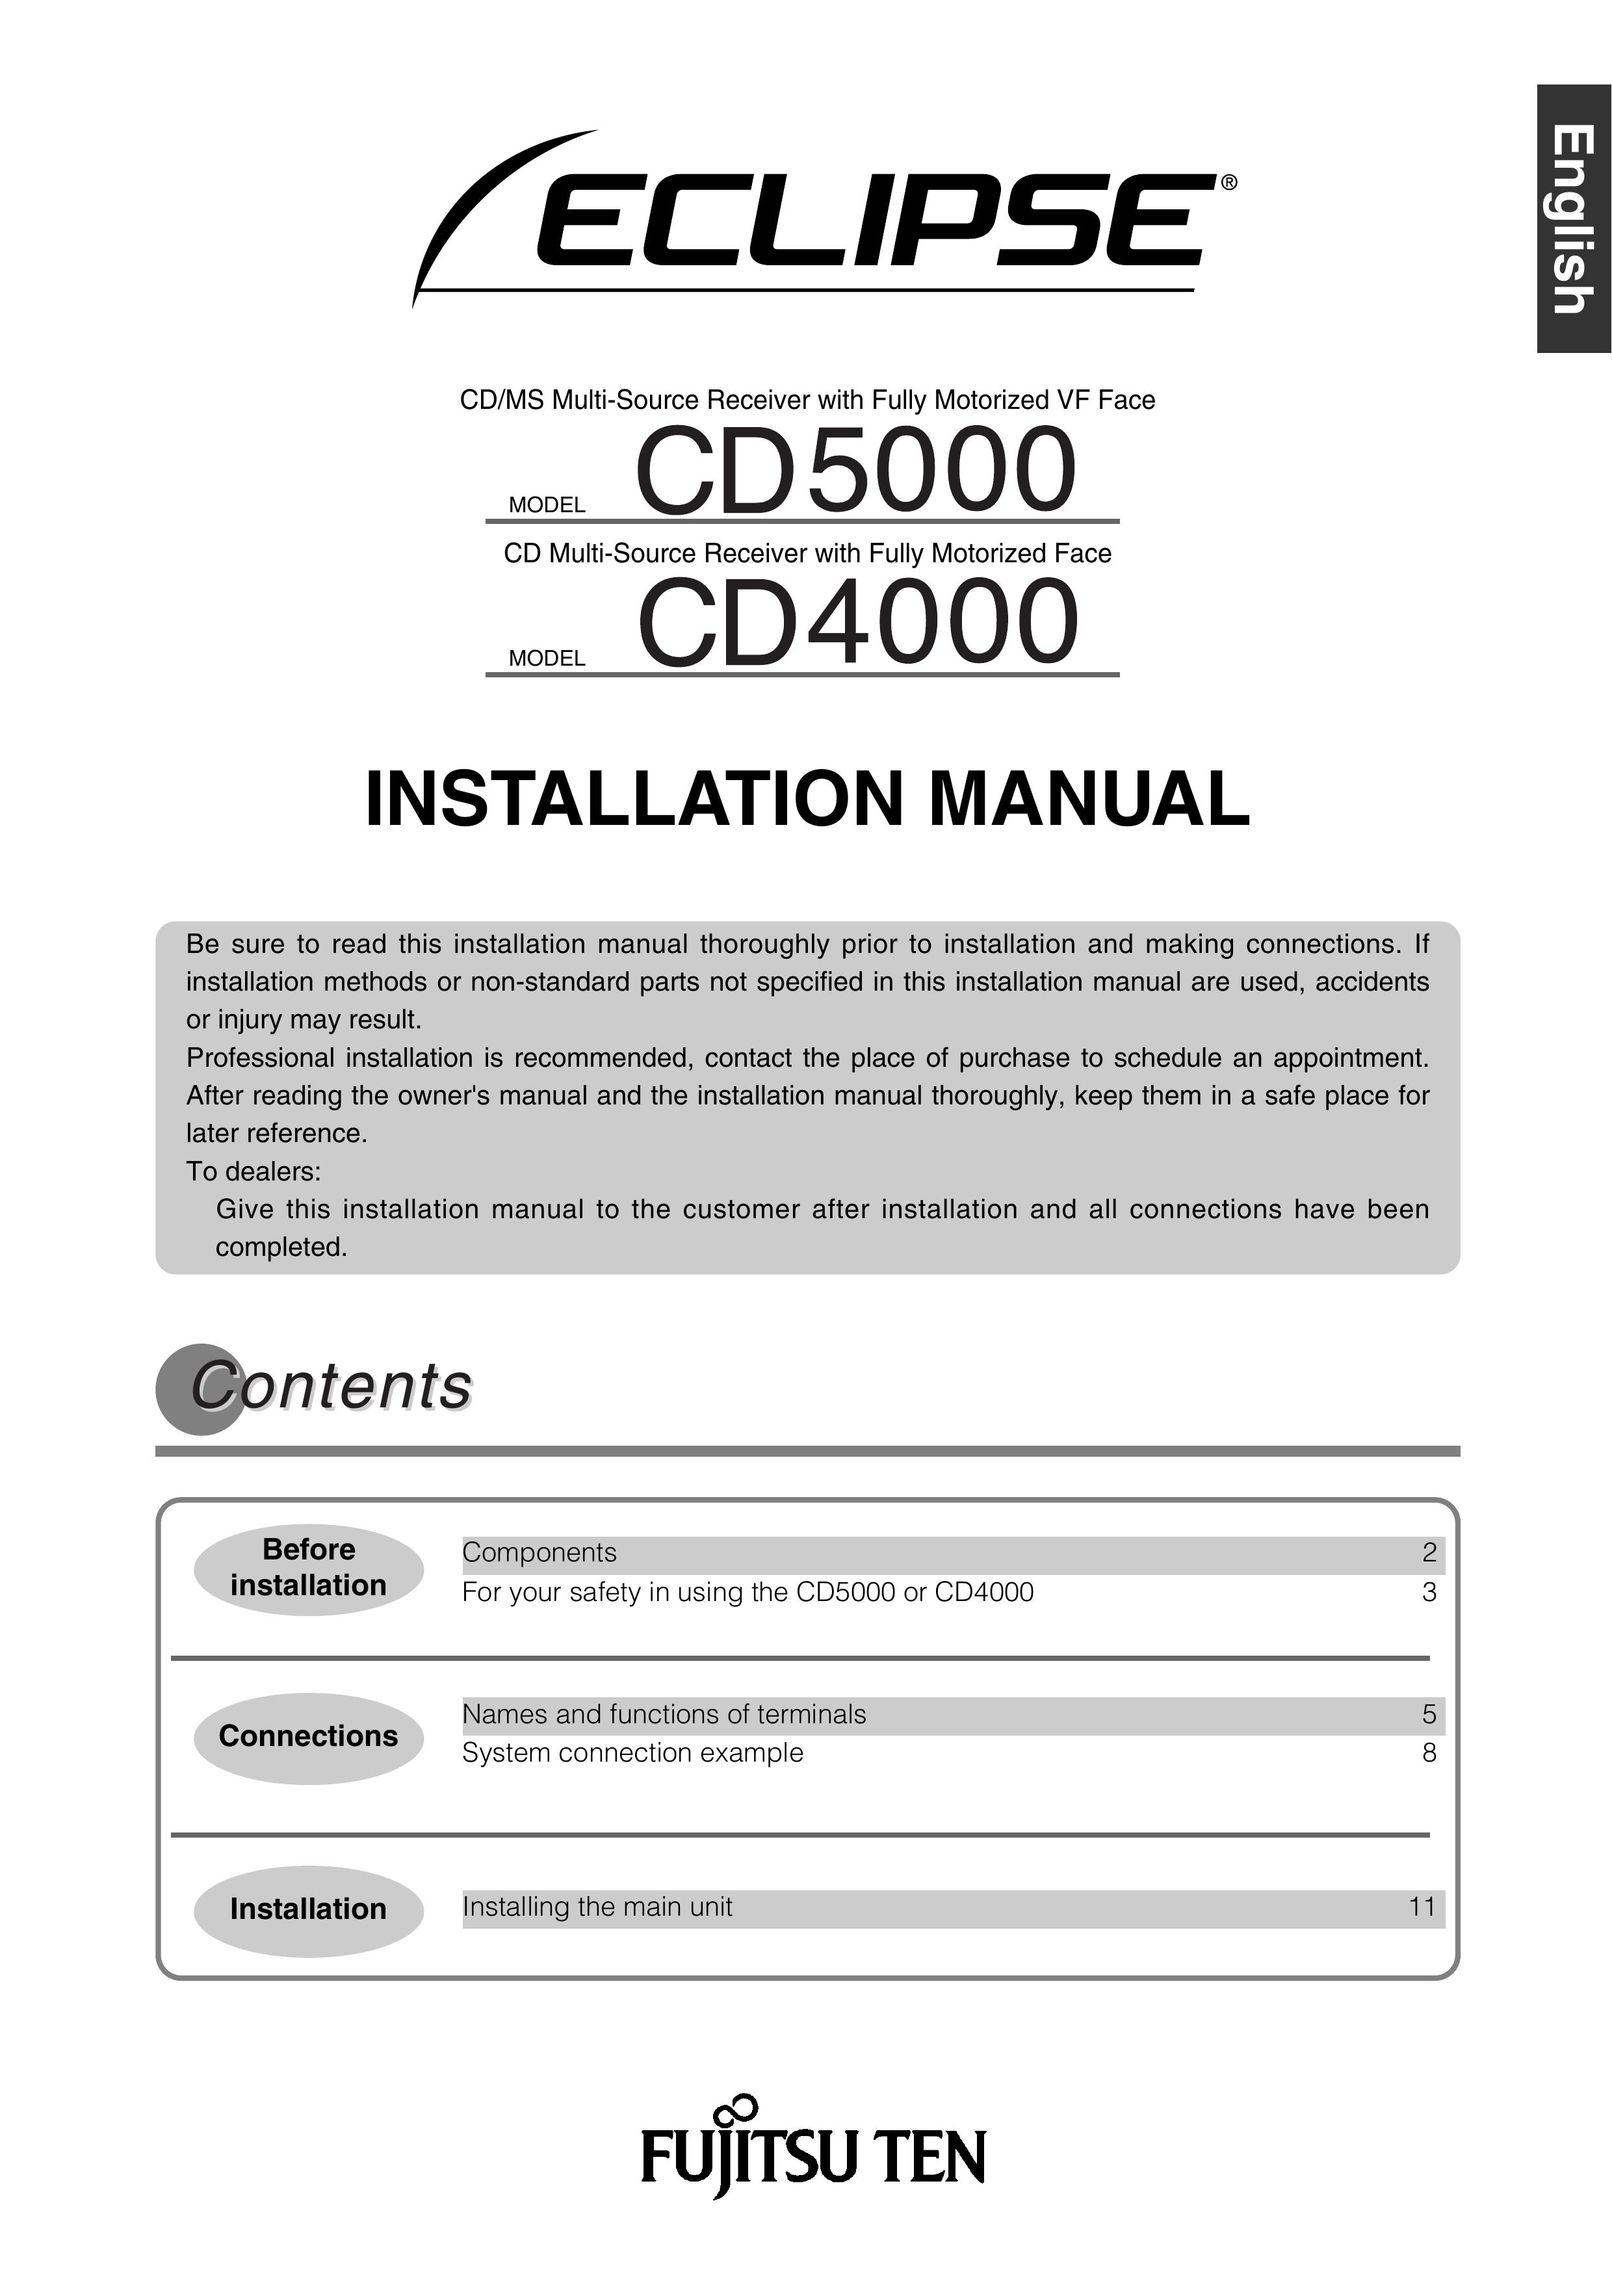 Eclipse - Fujitsu Ten CD4000 Car Stereo System User Manual